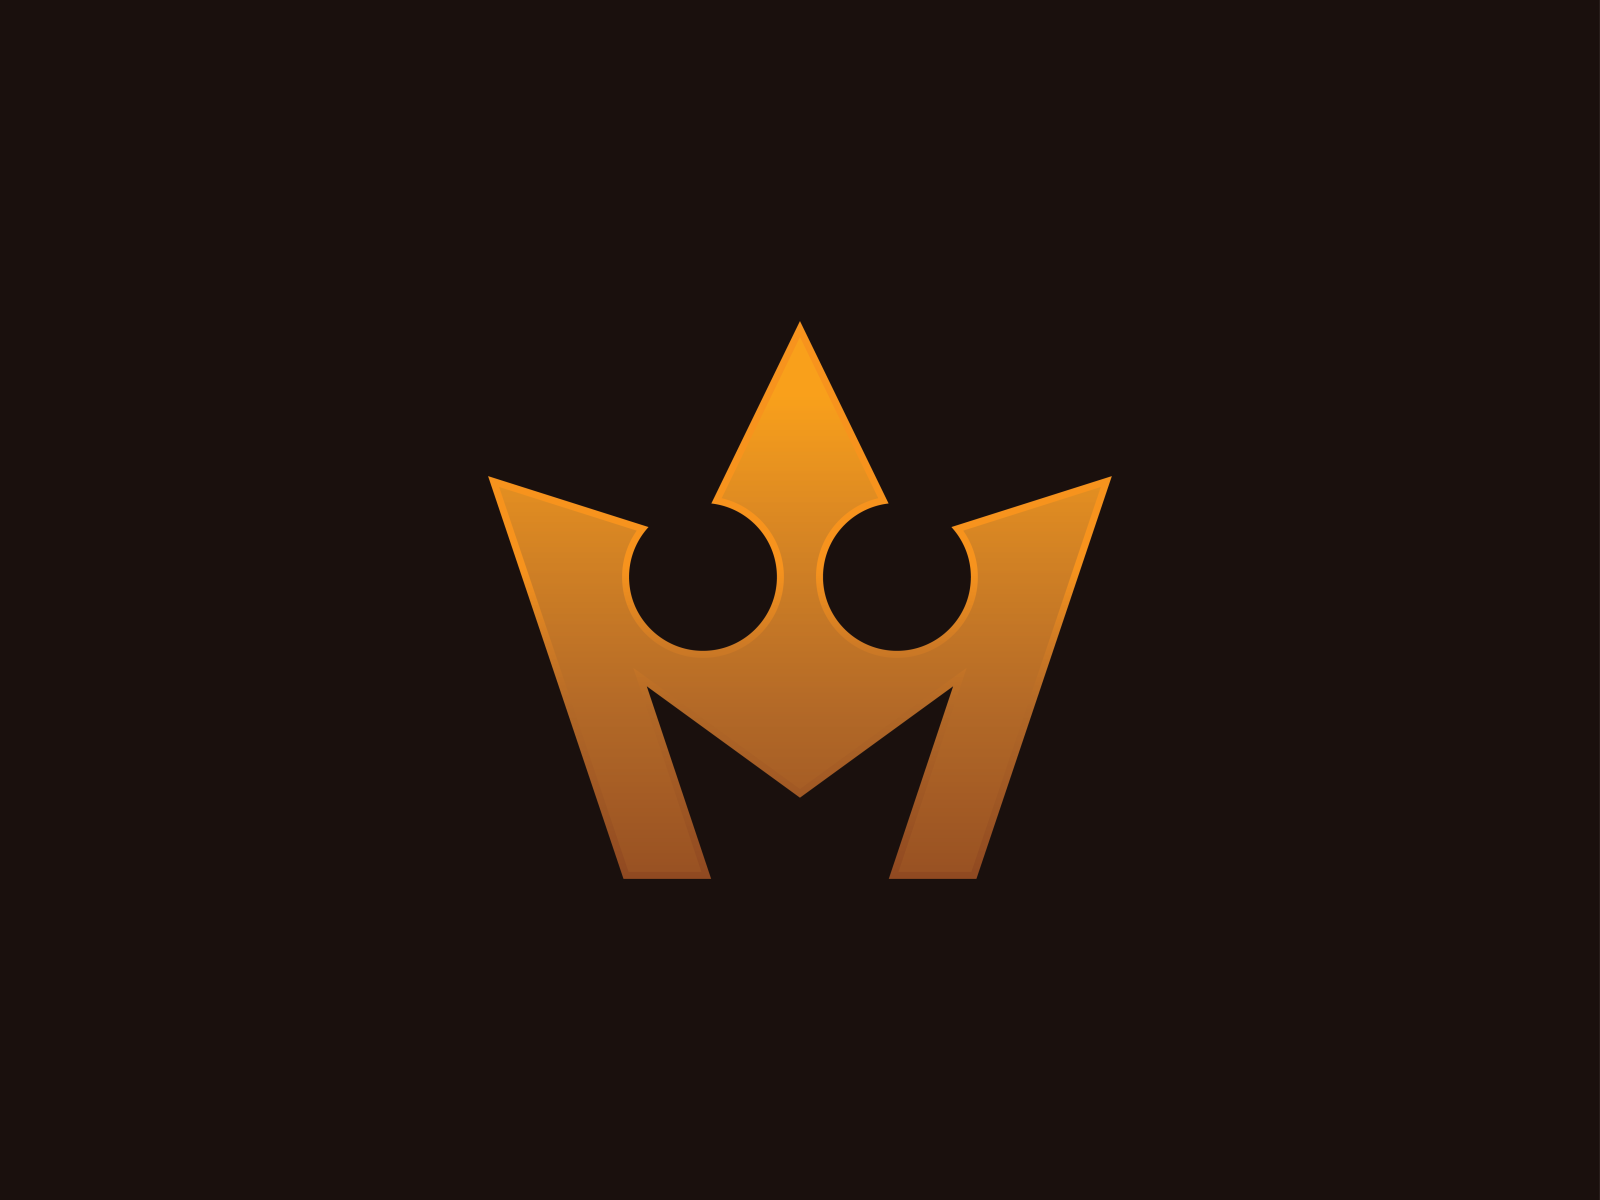 Letter M Crown King Logo